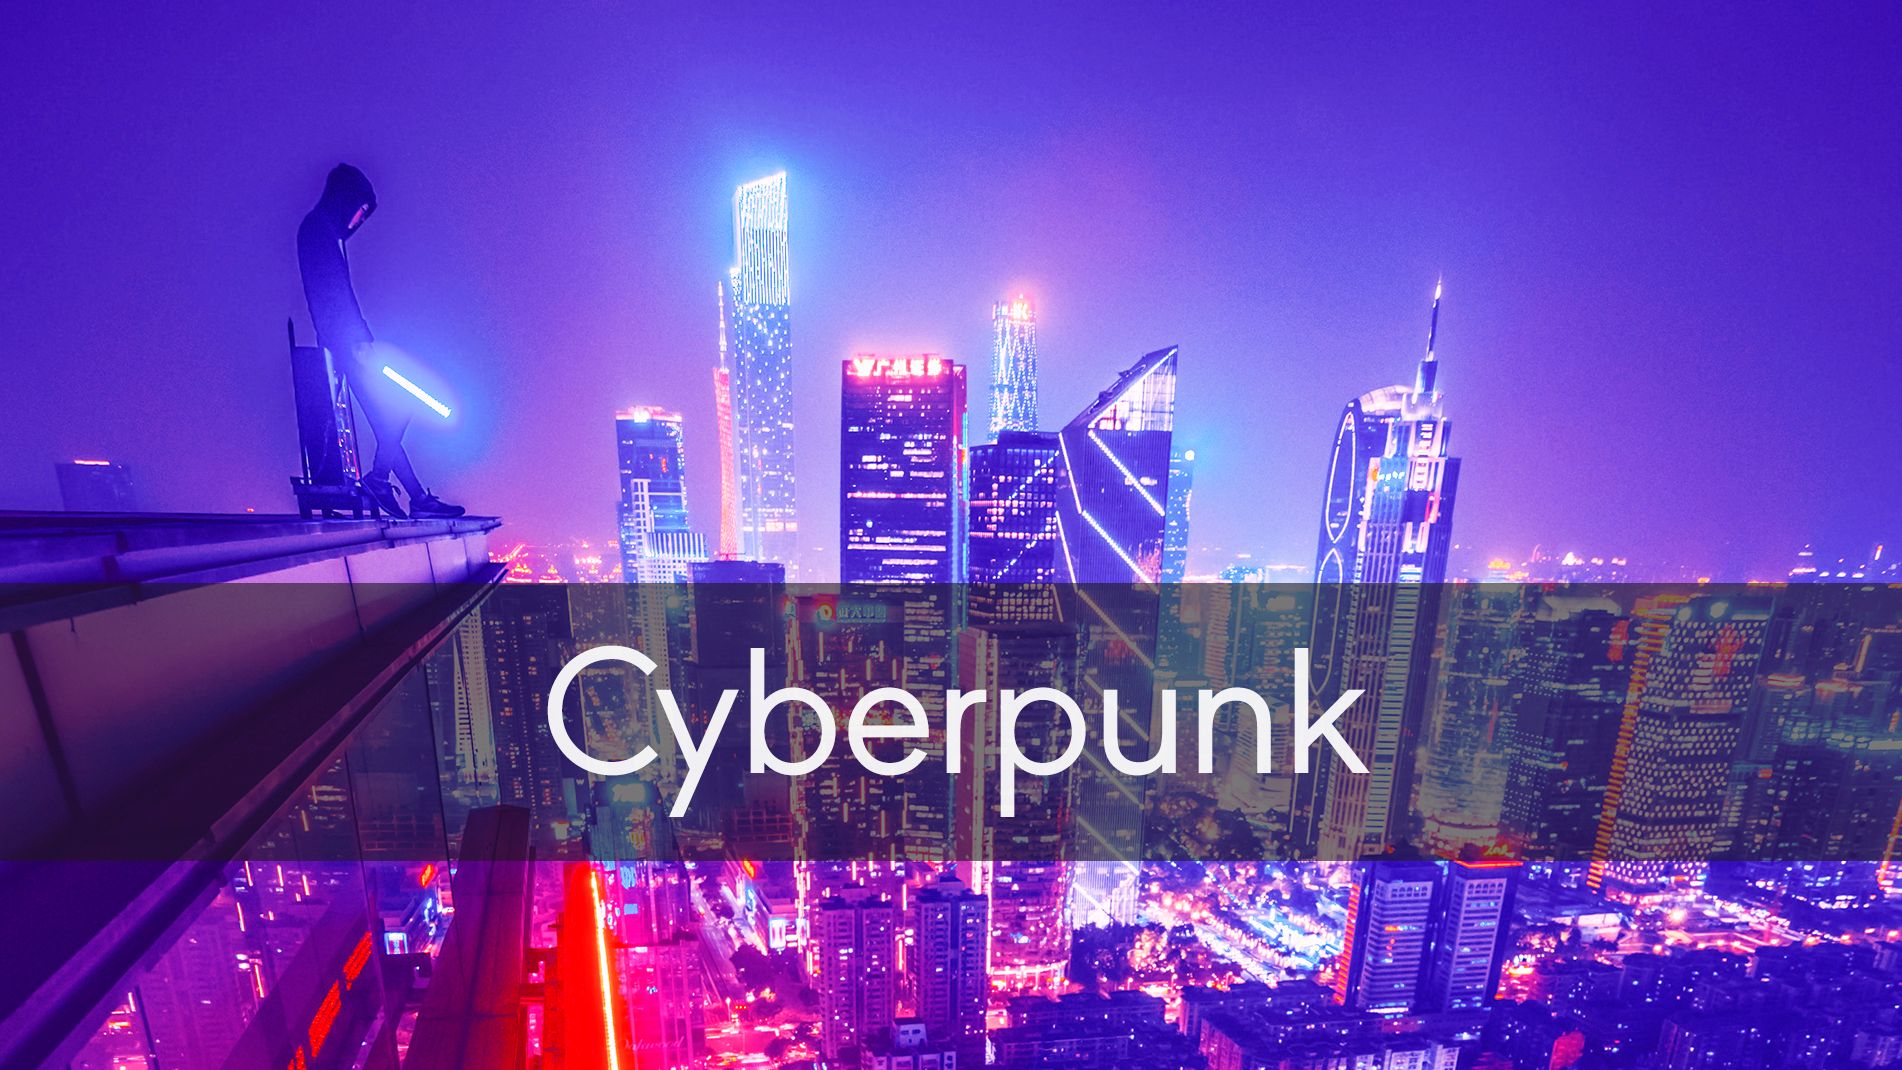 1994982988_preview_Cyberpunk_big4